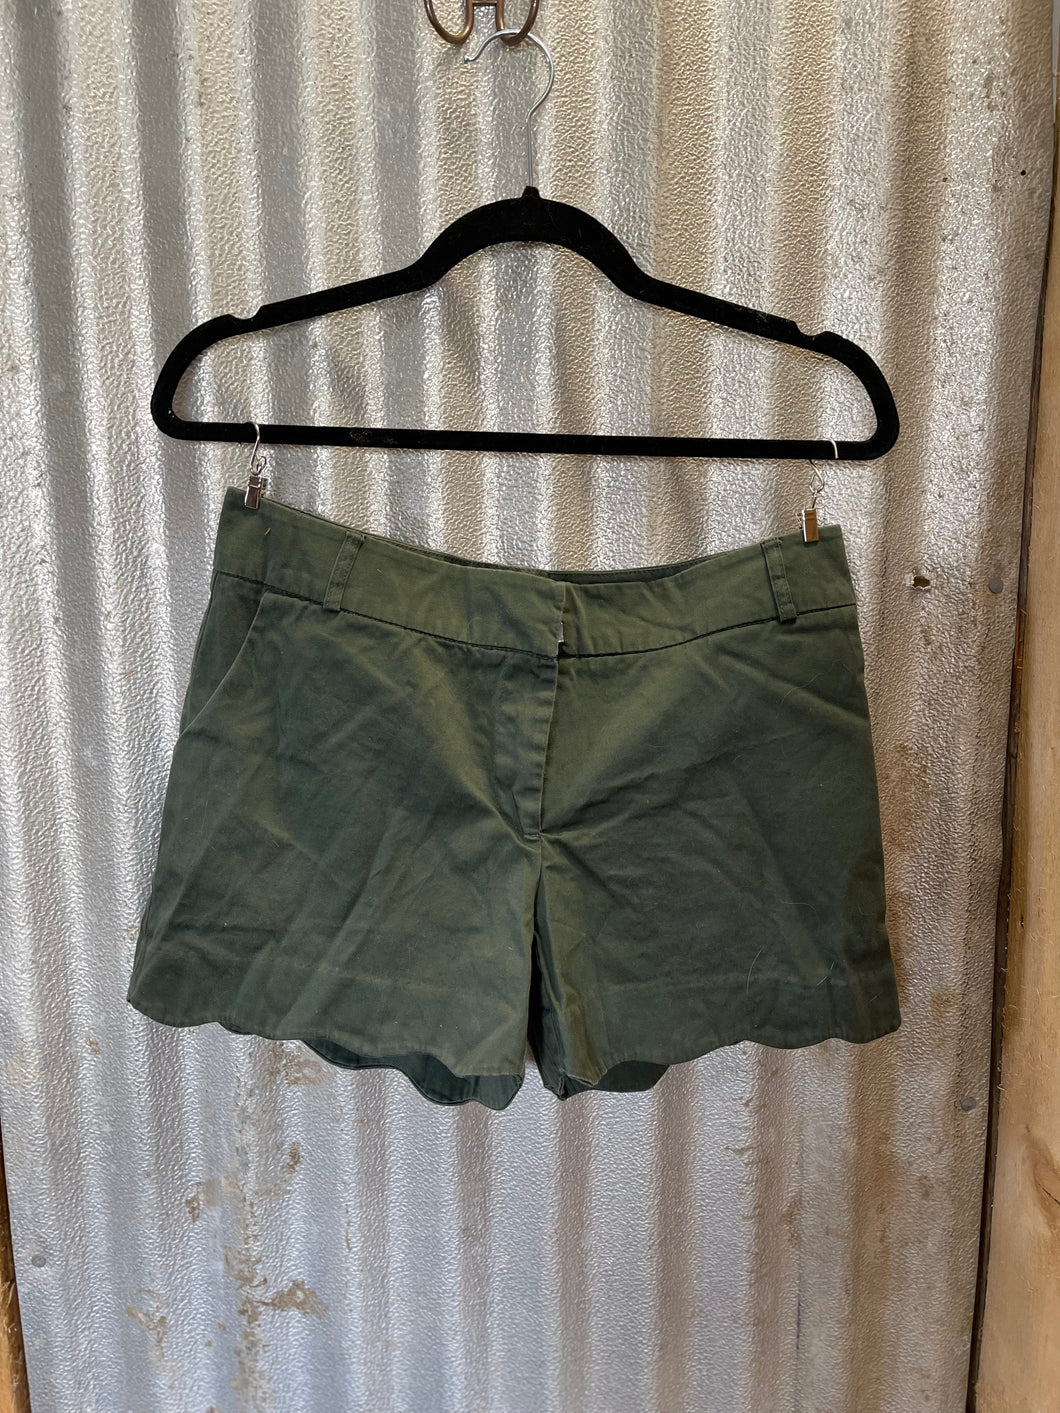 Sz 5/6: Green Shorts